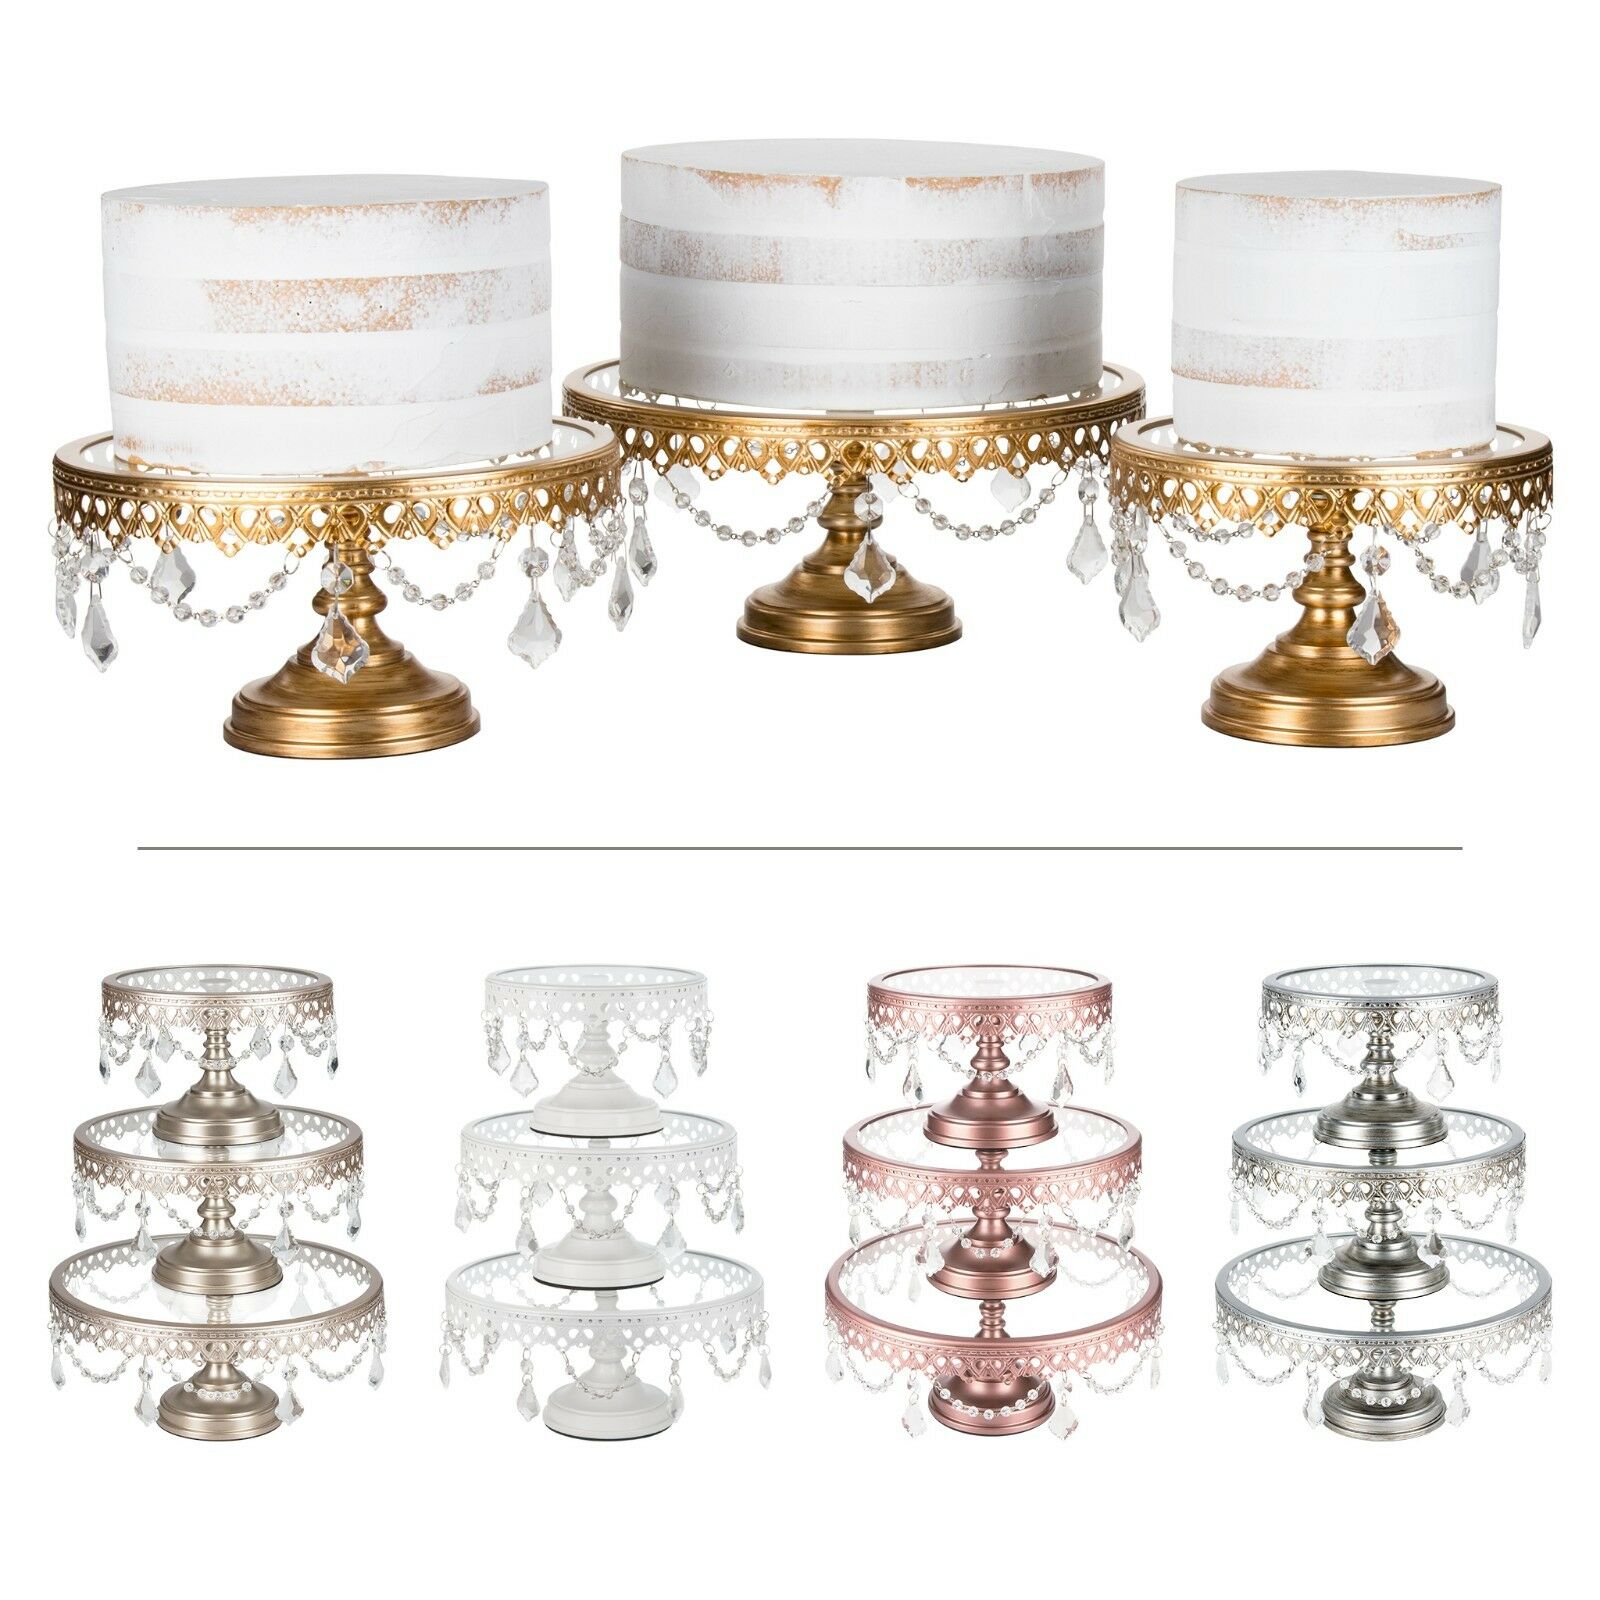 3-piece Cake Stand Set Glass Top Crystal Dessert Wedding Party Display Pedestal